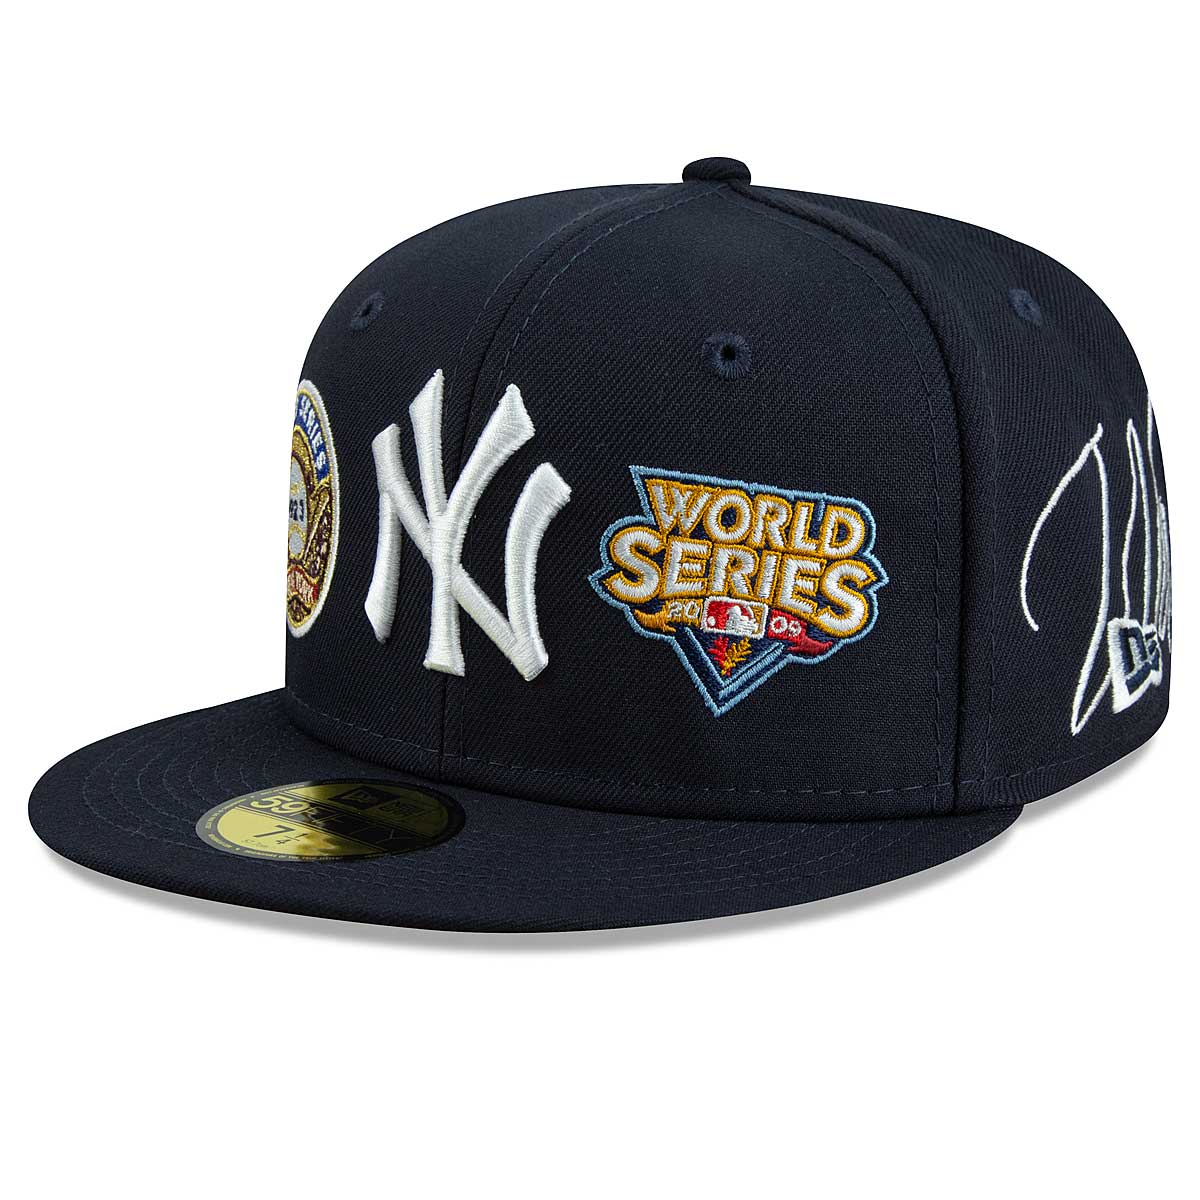 Buy MLB 5950 HISTORIC CHAMPS NEW YORK YANKEES for N/A 0.0 on KICKZ.com!